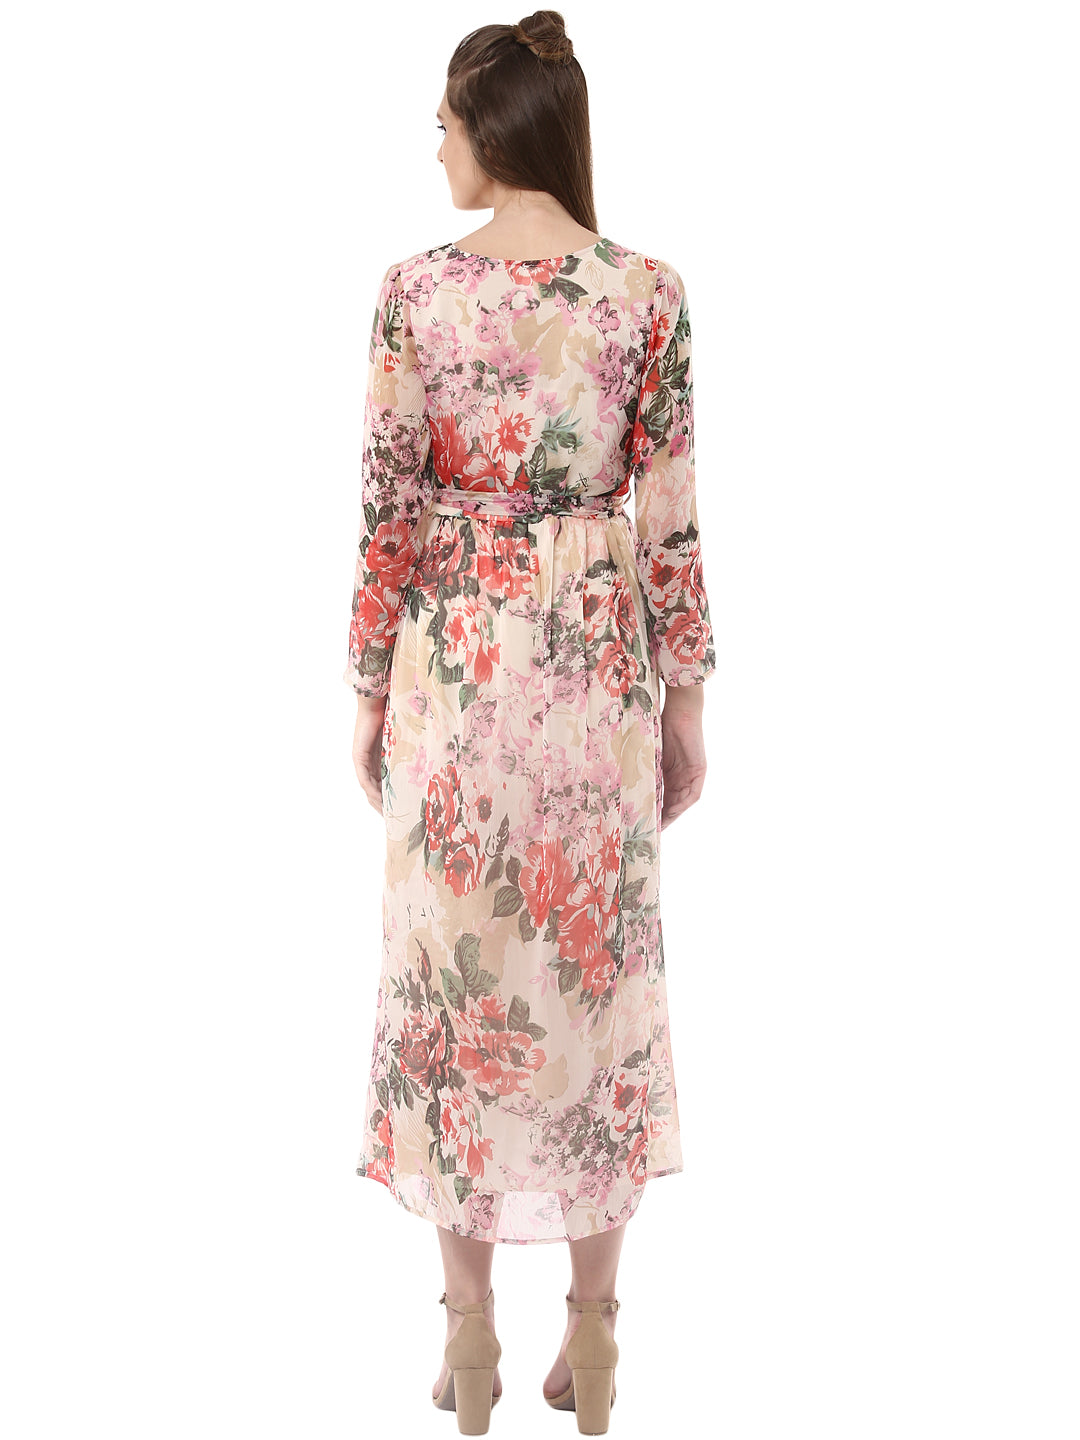 Women's Floral Chiffon Dress with Belt - StyleStone